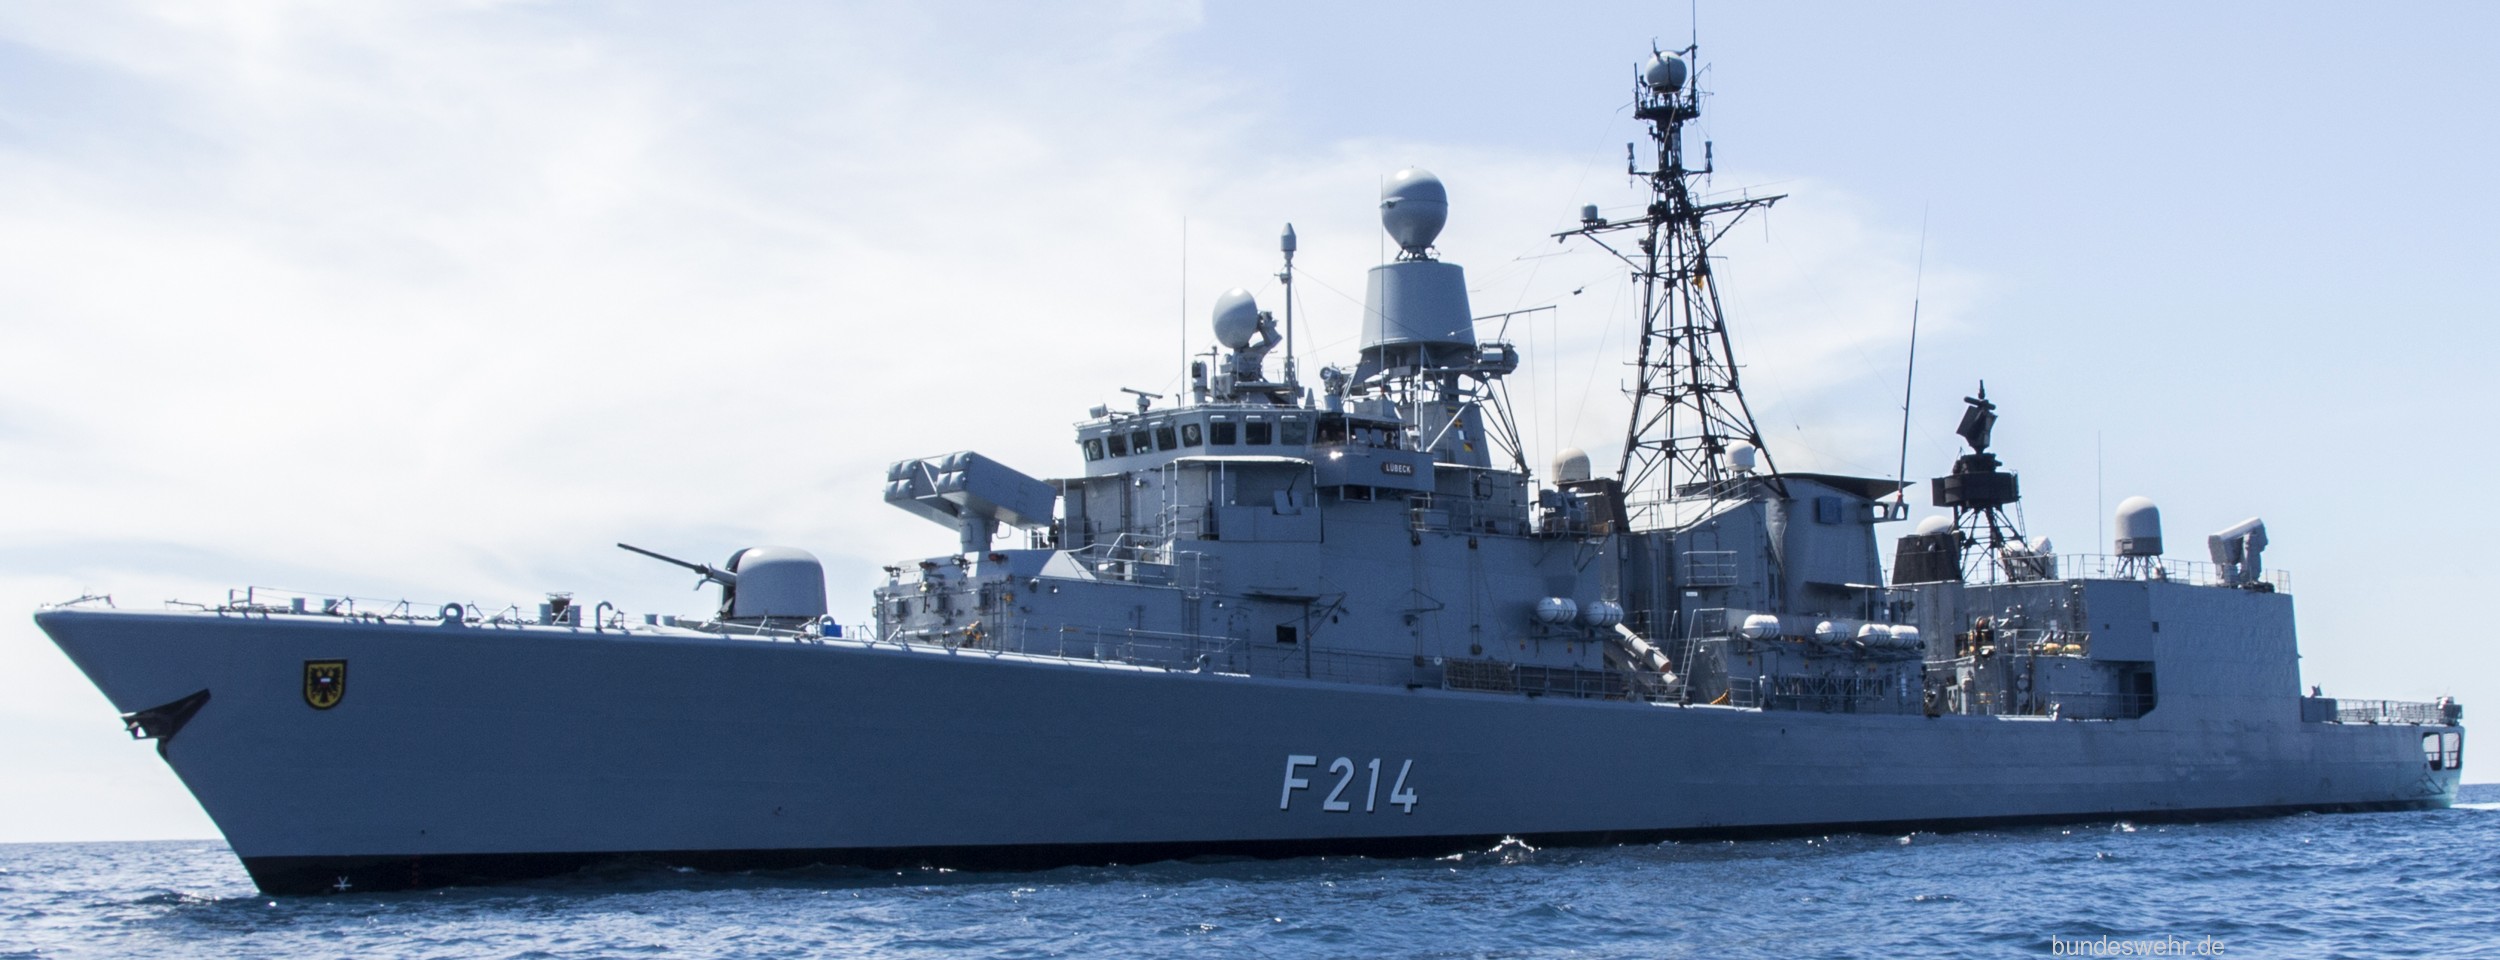 f-214 fgs lubeck type 122 bremen class frigate german navy 11